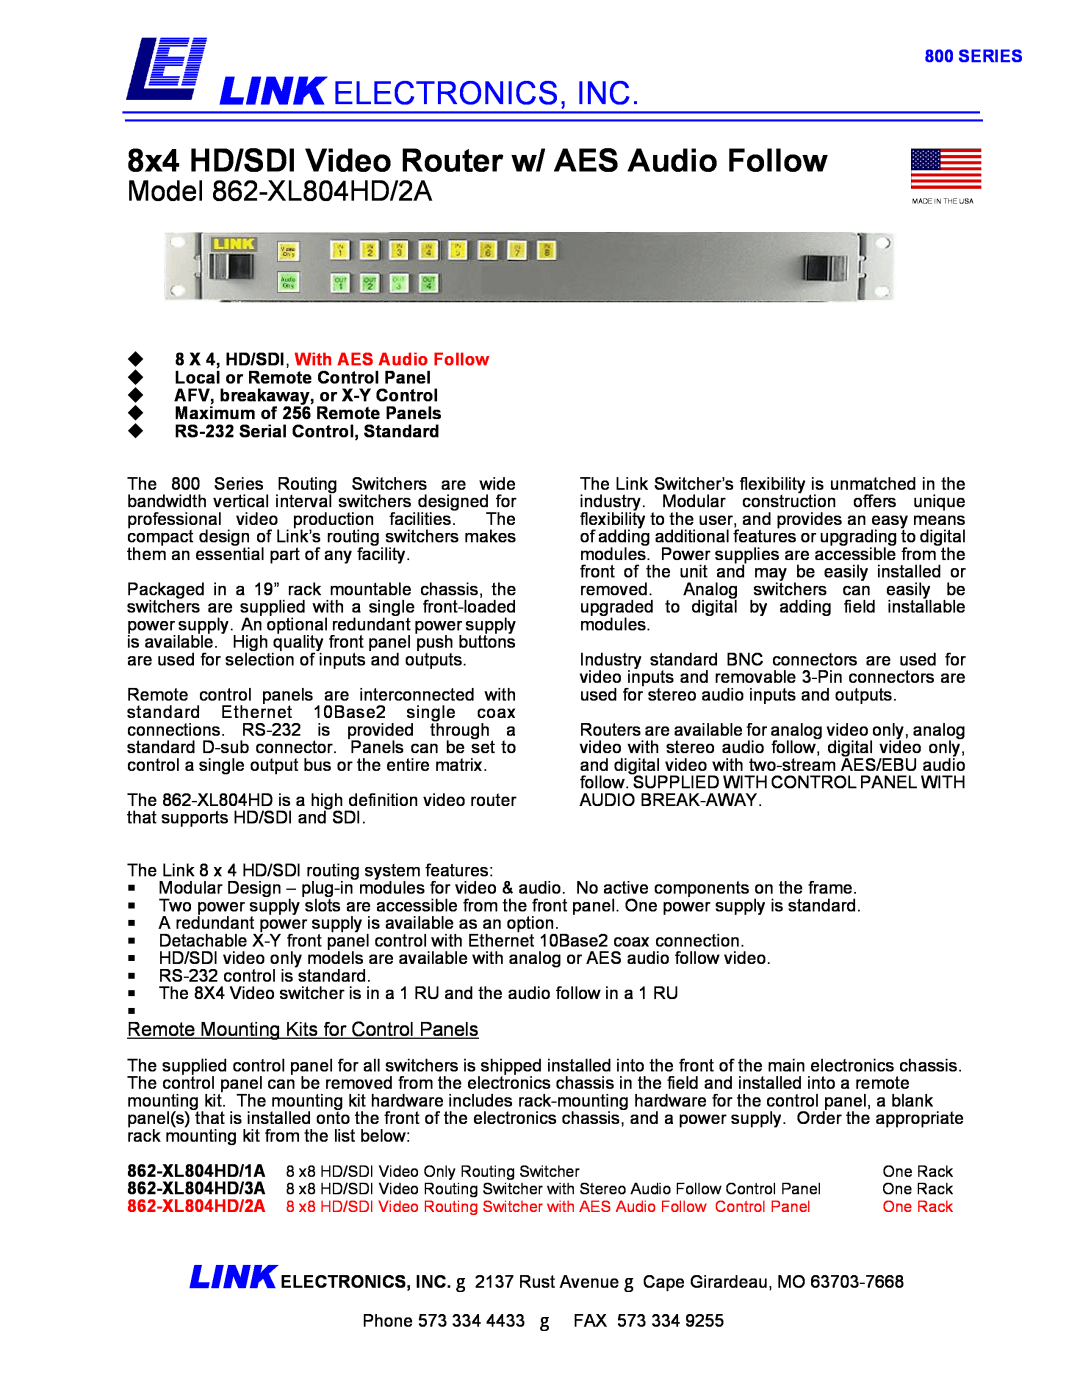 Link electronic 862-XL804HD/2A manual Series, Link Electronics, Inc, 8x4 HD/SDI Video Router w/ AES Audio Follow 